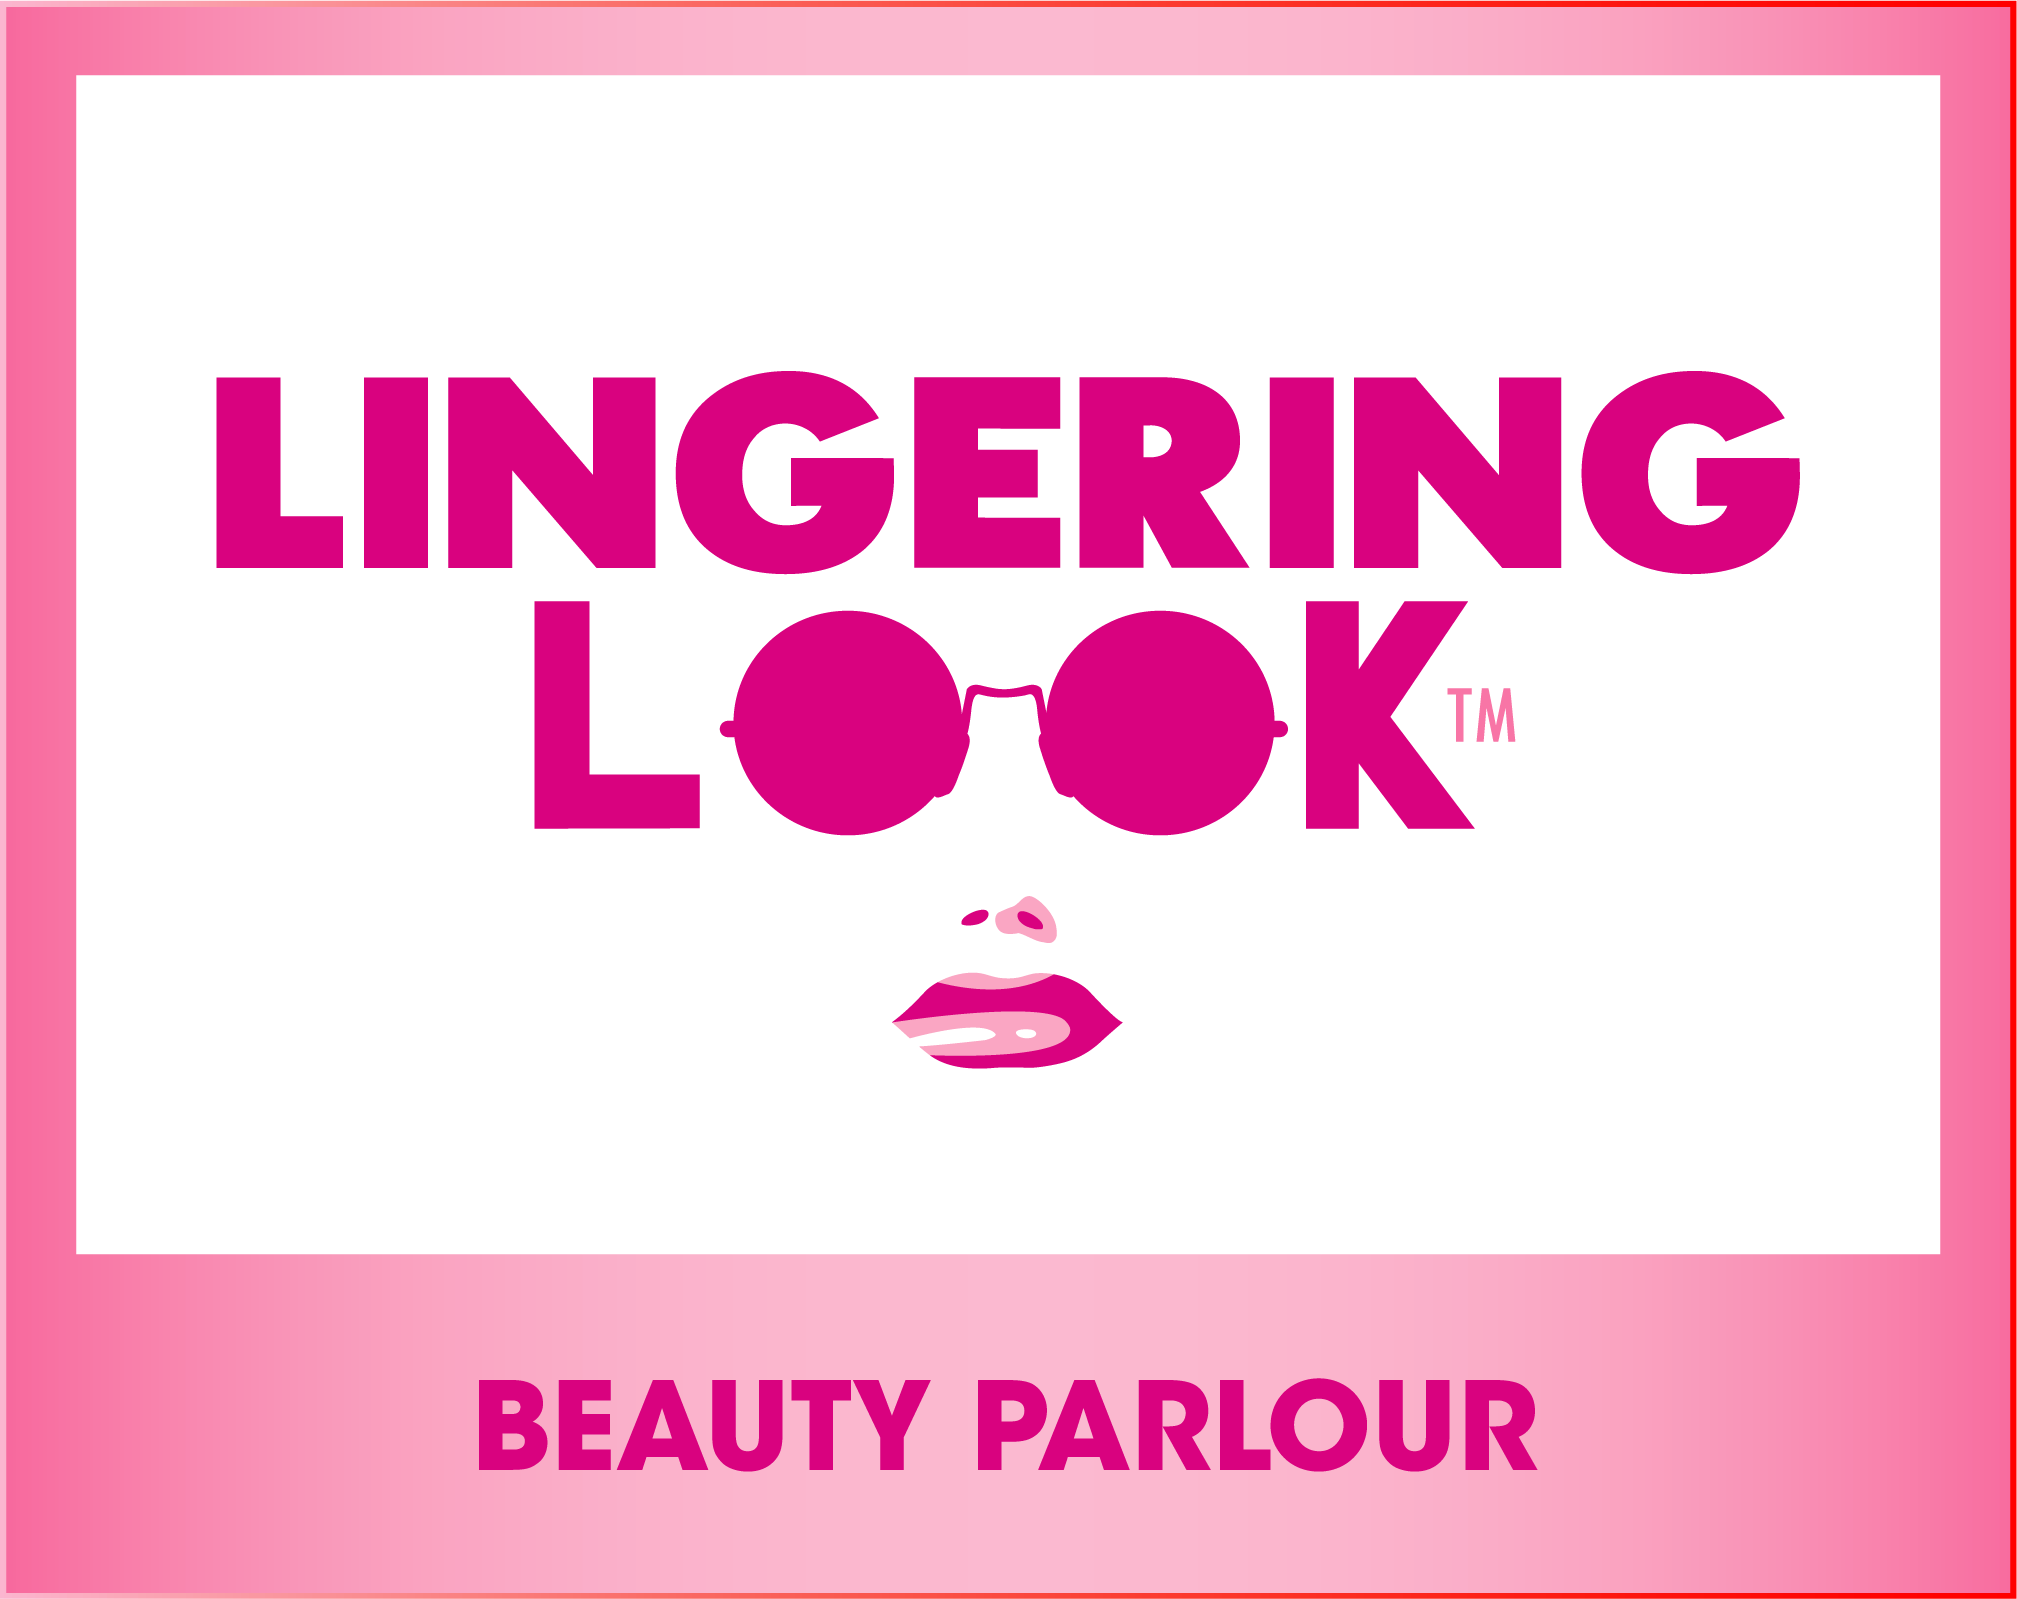 Lingering Look Beauty Parlour